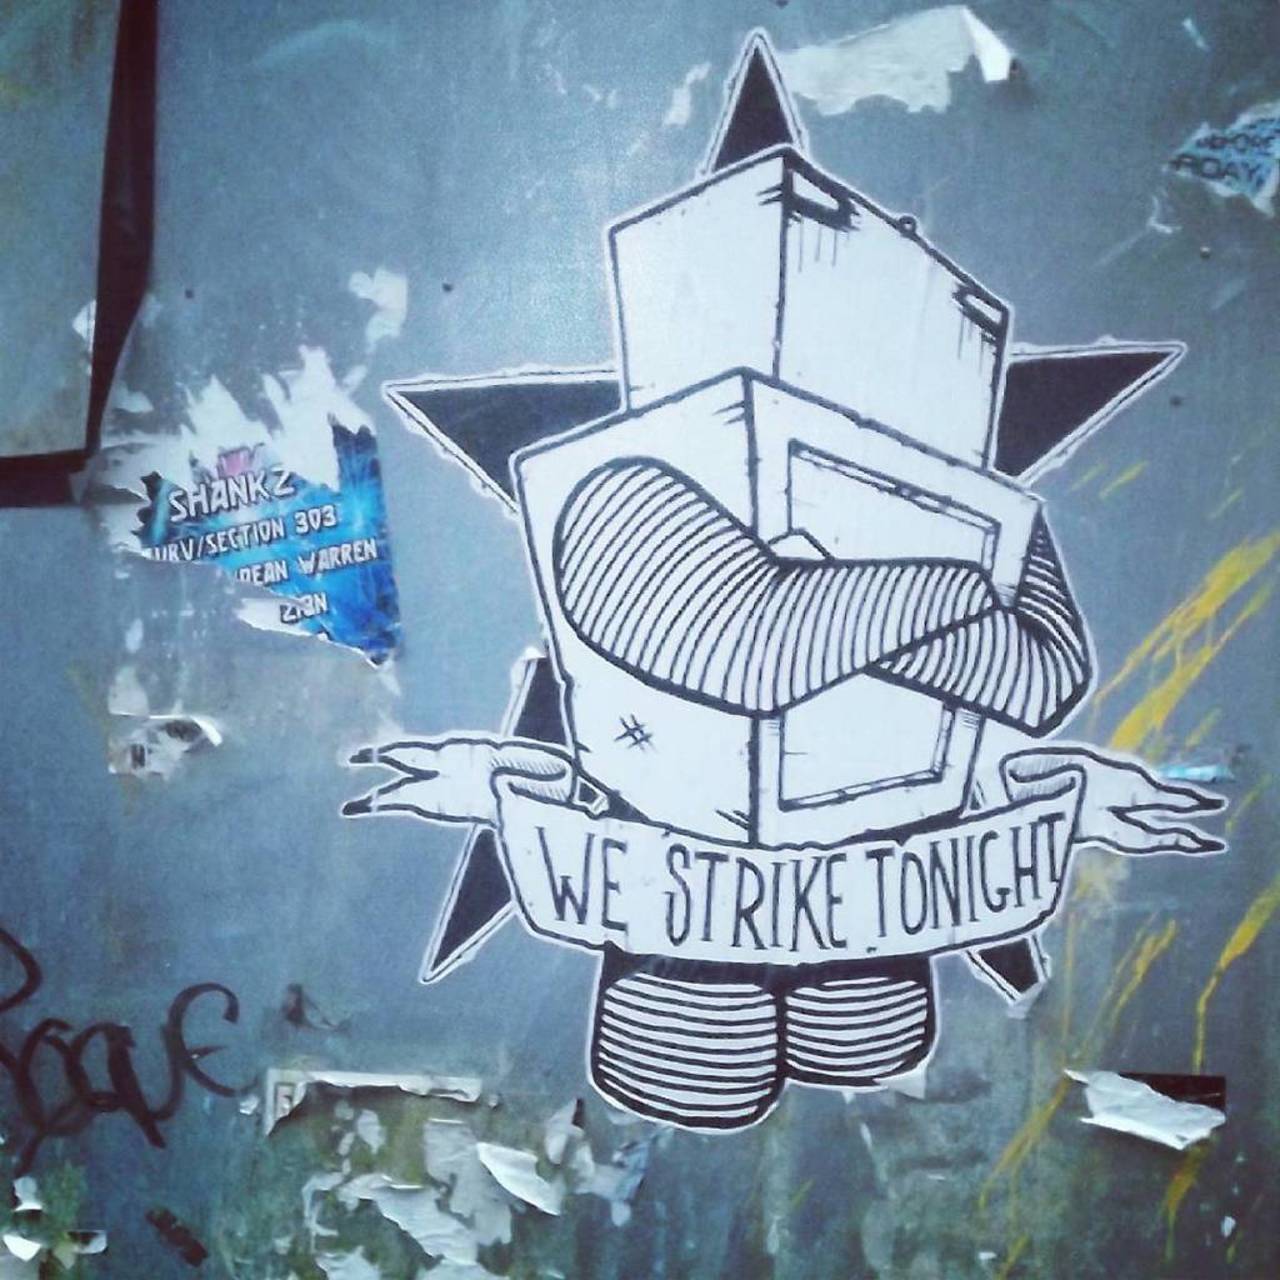 We Strike Tonight

#robot #slapup #graffiti #stickers #graff #streetart #norwich #archive #arreff #instastreet #ins… https://t.co/2YtaVLZDgn